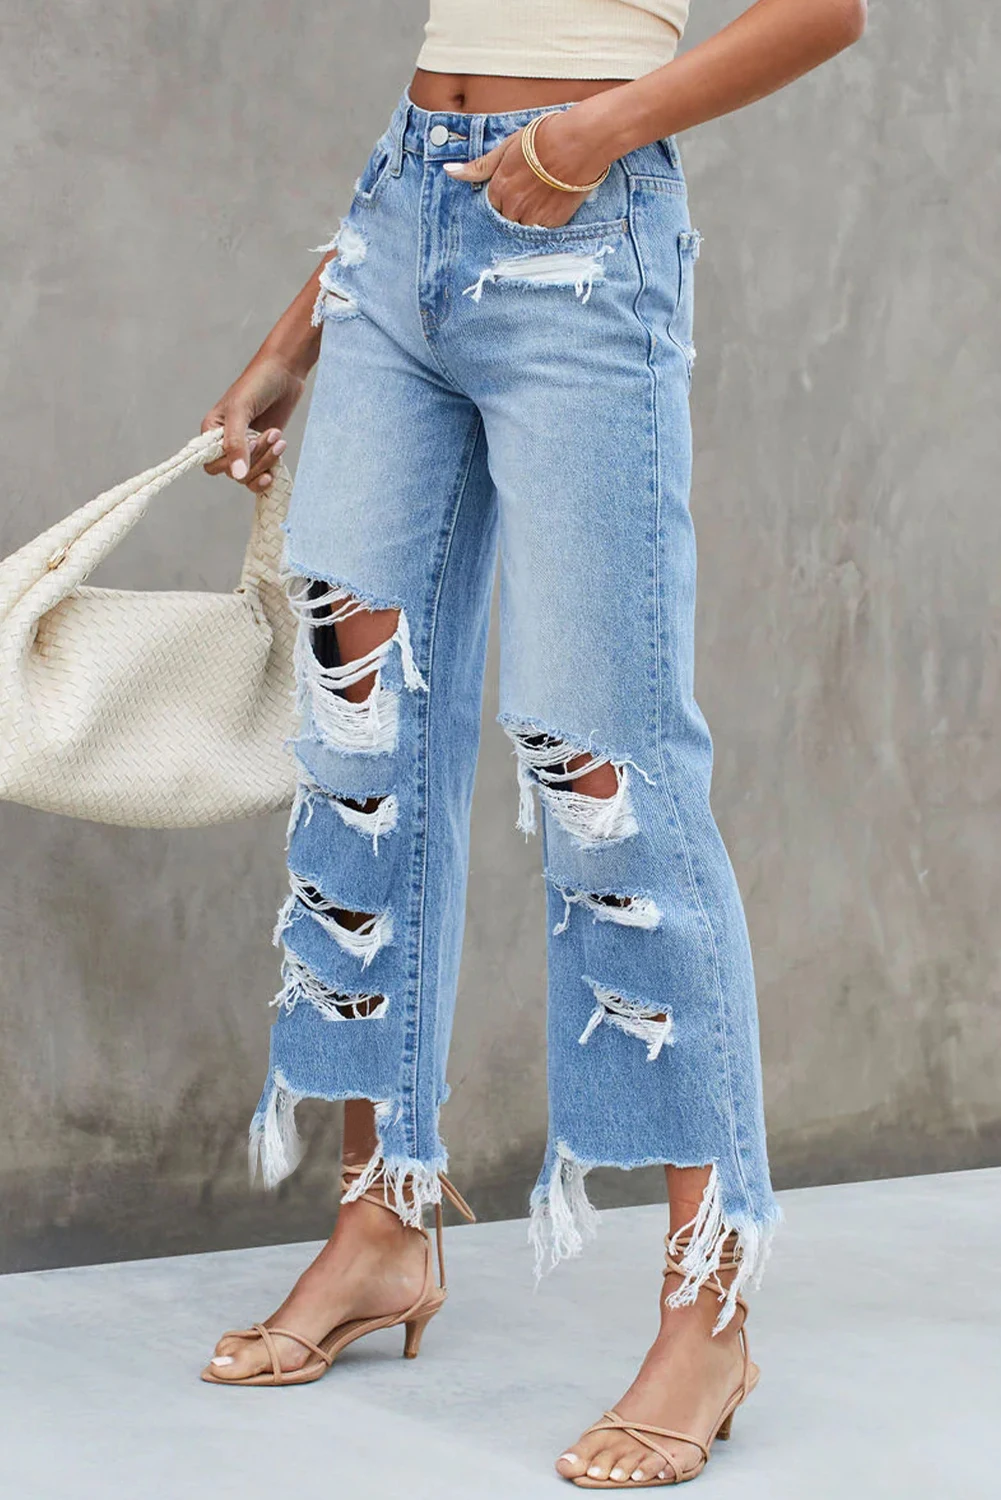 Dear-Lover Heavy Destroyed Latest Design High Waist Boyfriend Jeans For Women